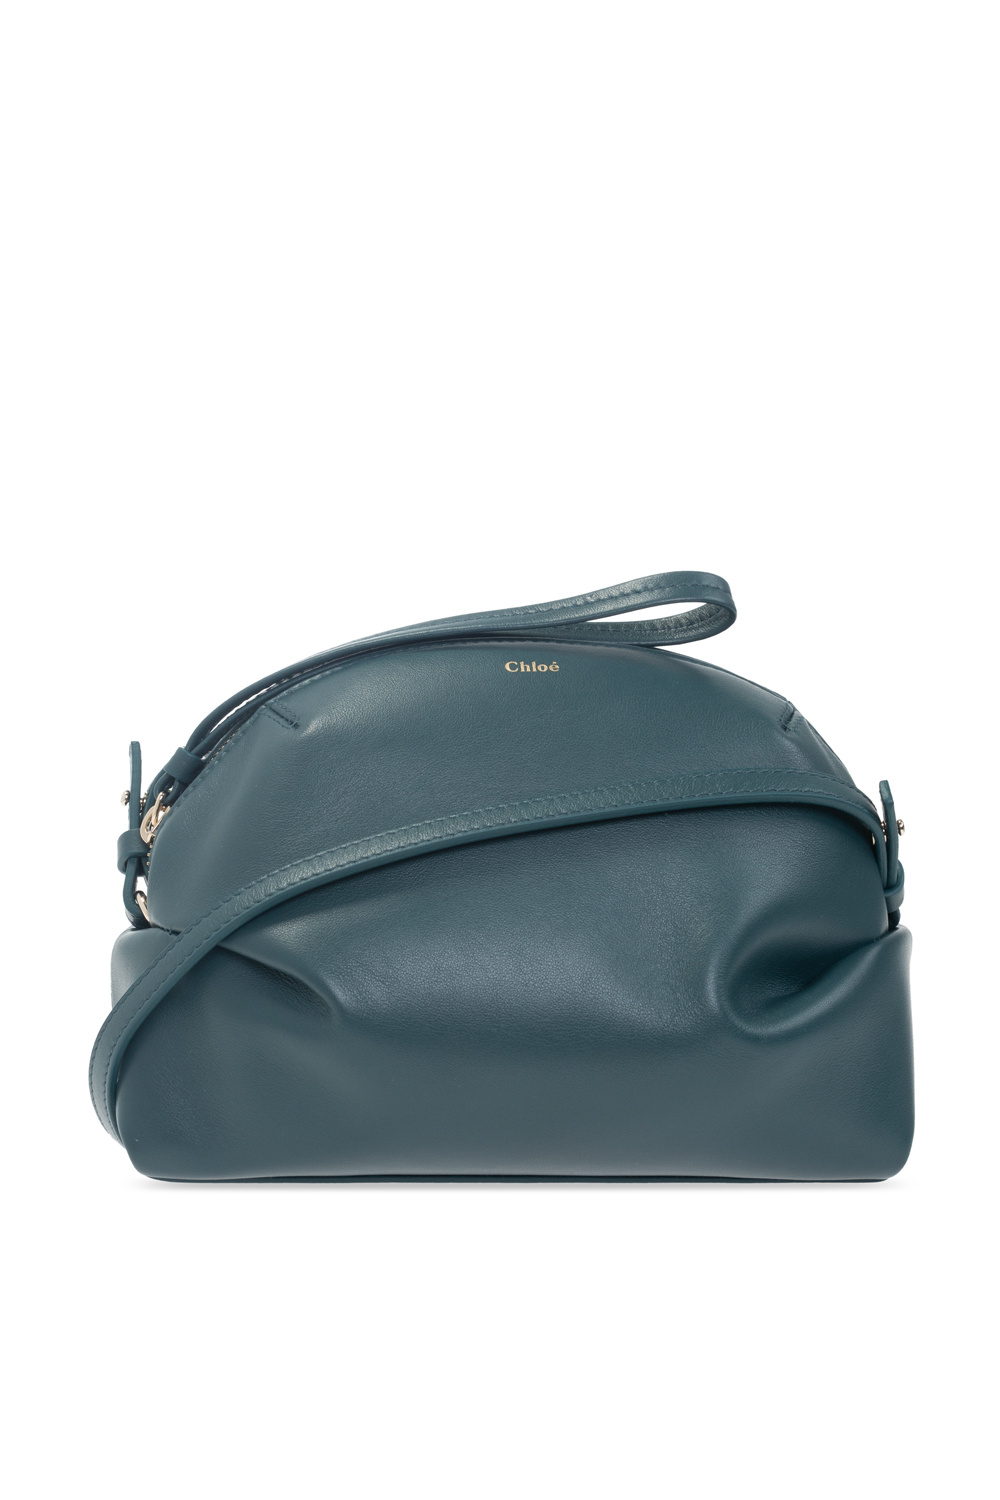 Chloé 'Judy' shoulder bag, Women's Bags